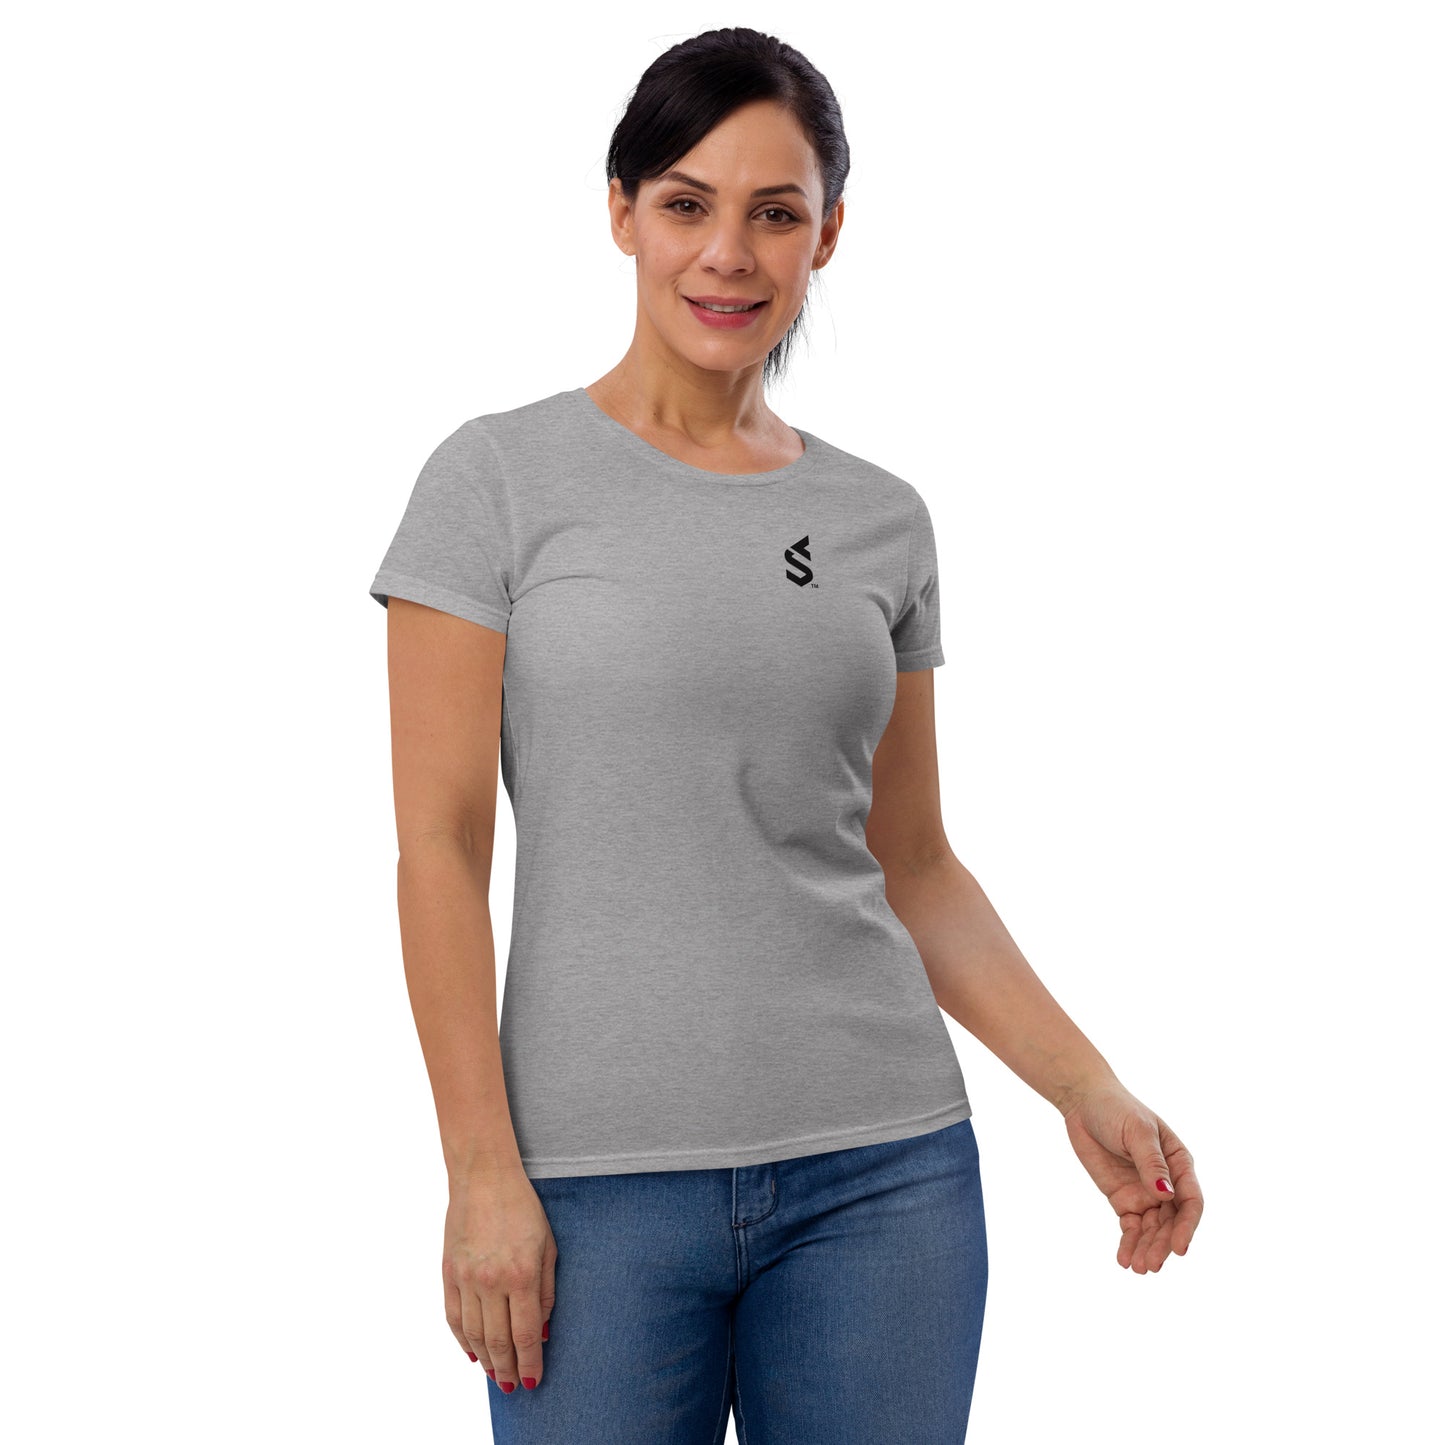 Sponsorless Women's short sleeve t-shirt